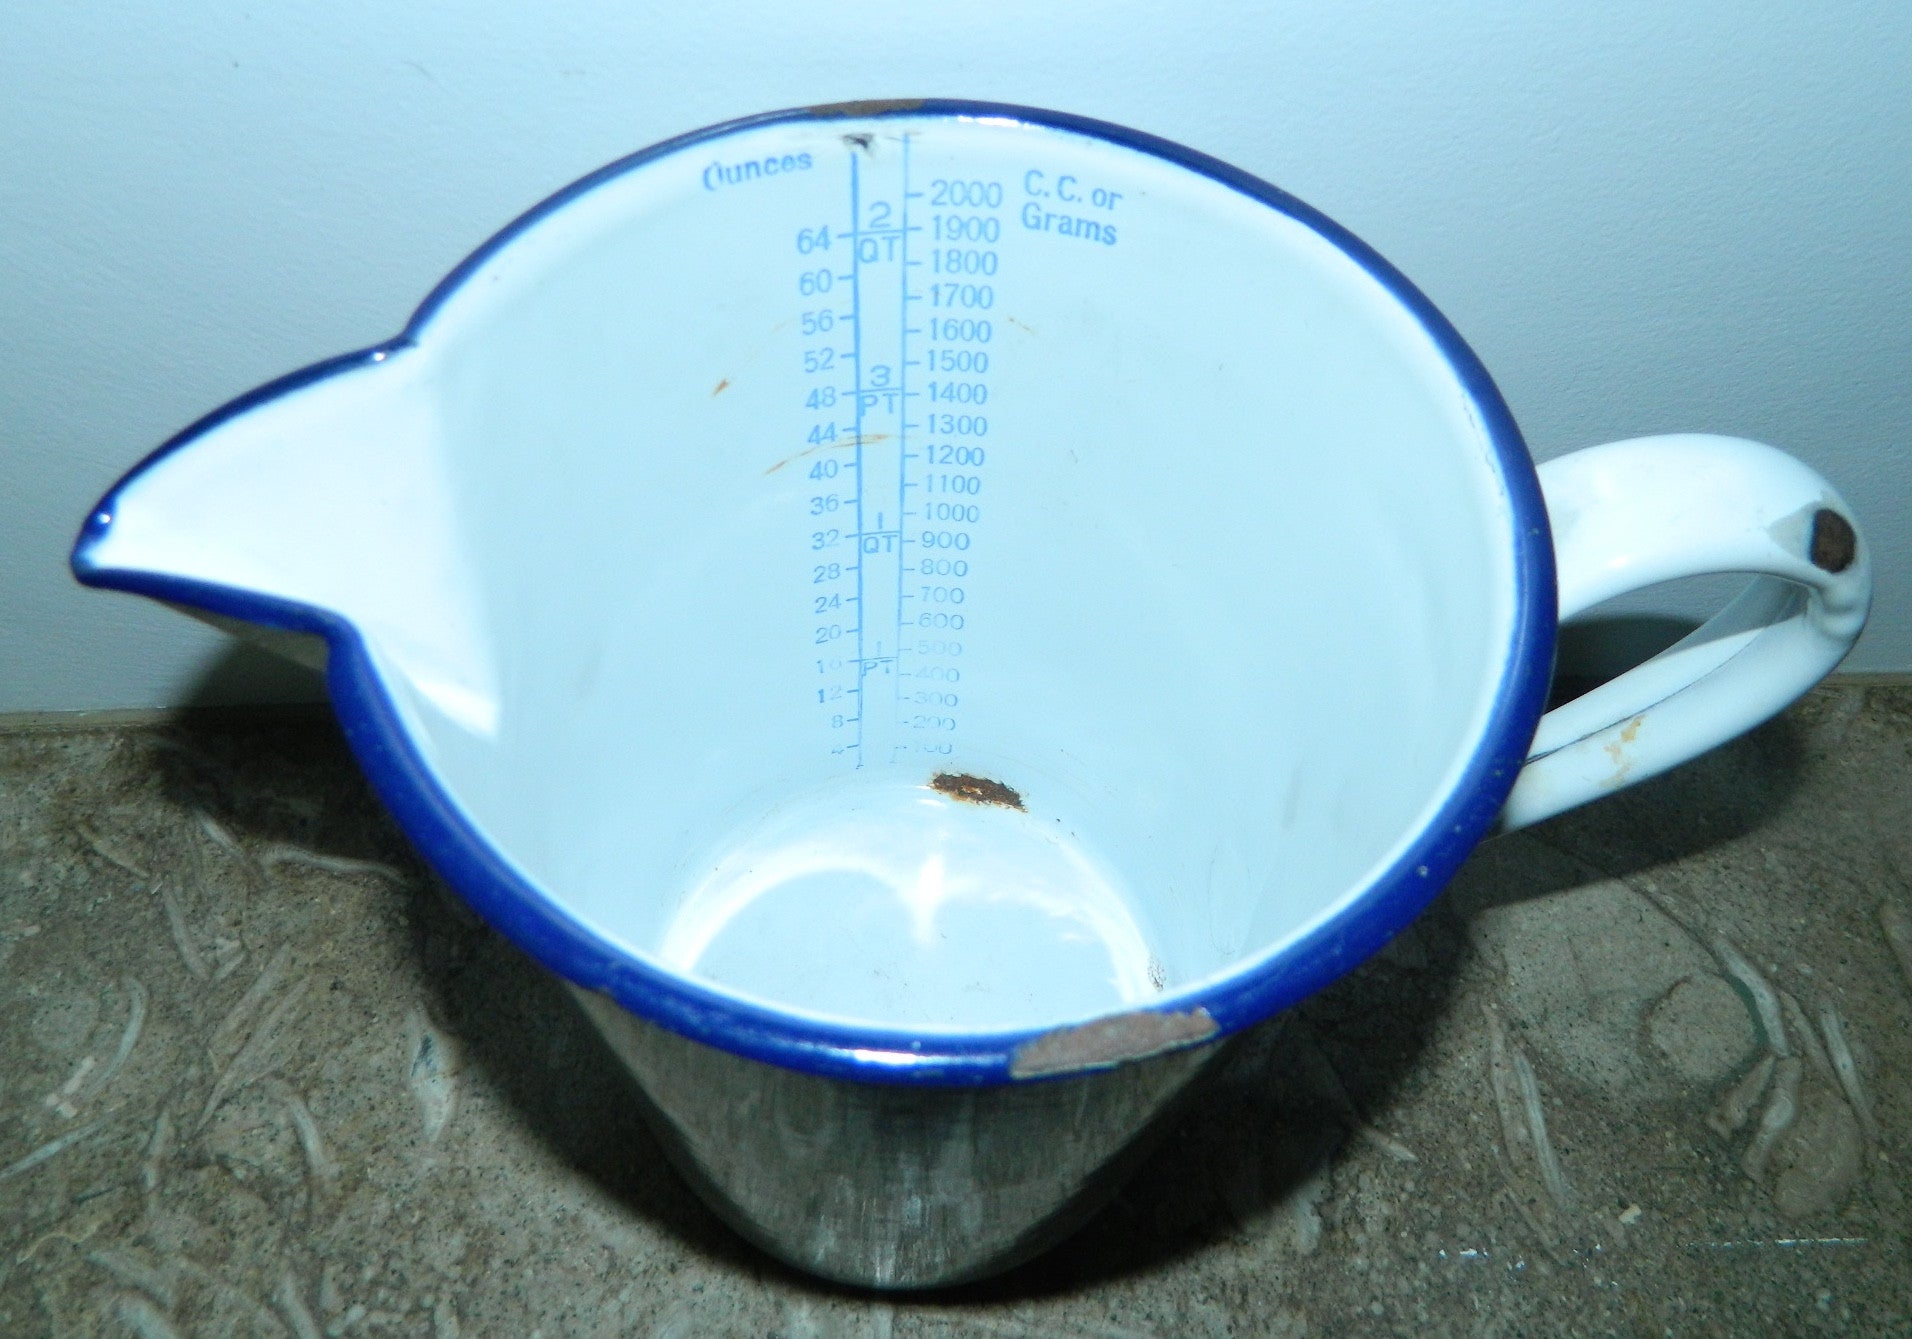 vintage 1940s enamel pitcher English metal measuring jug 64 oz / 2000 Gr.